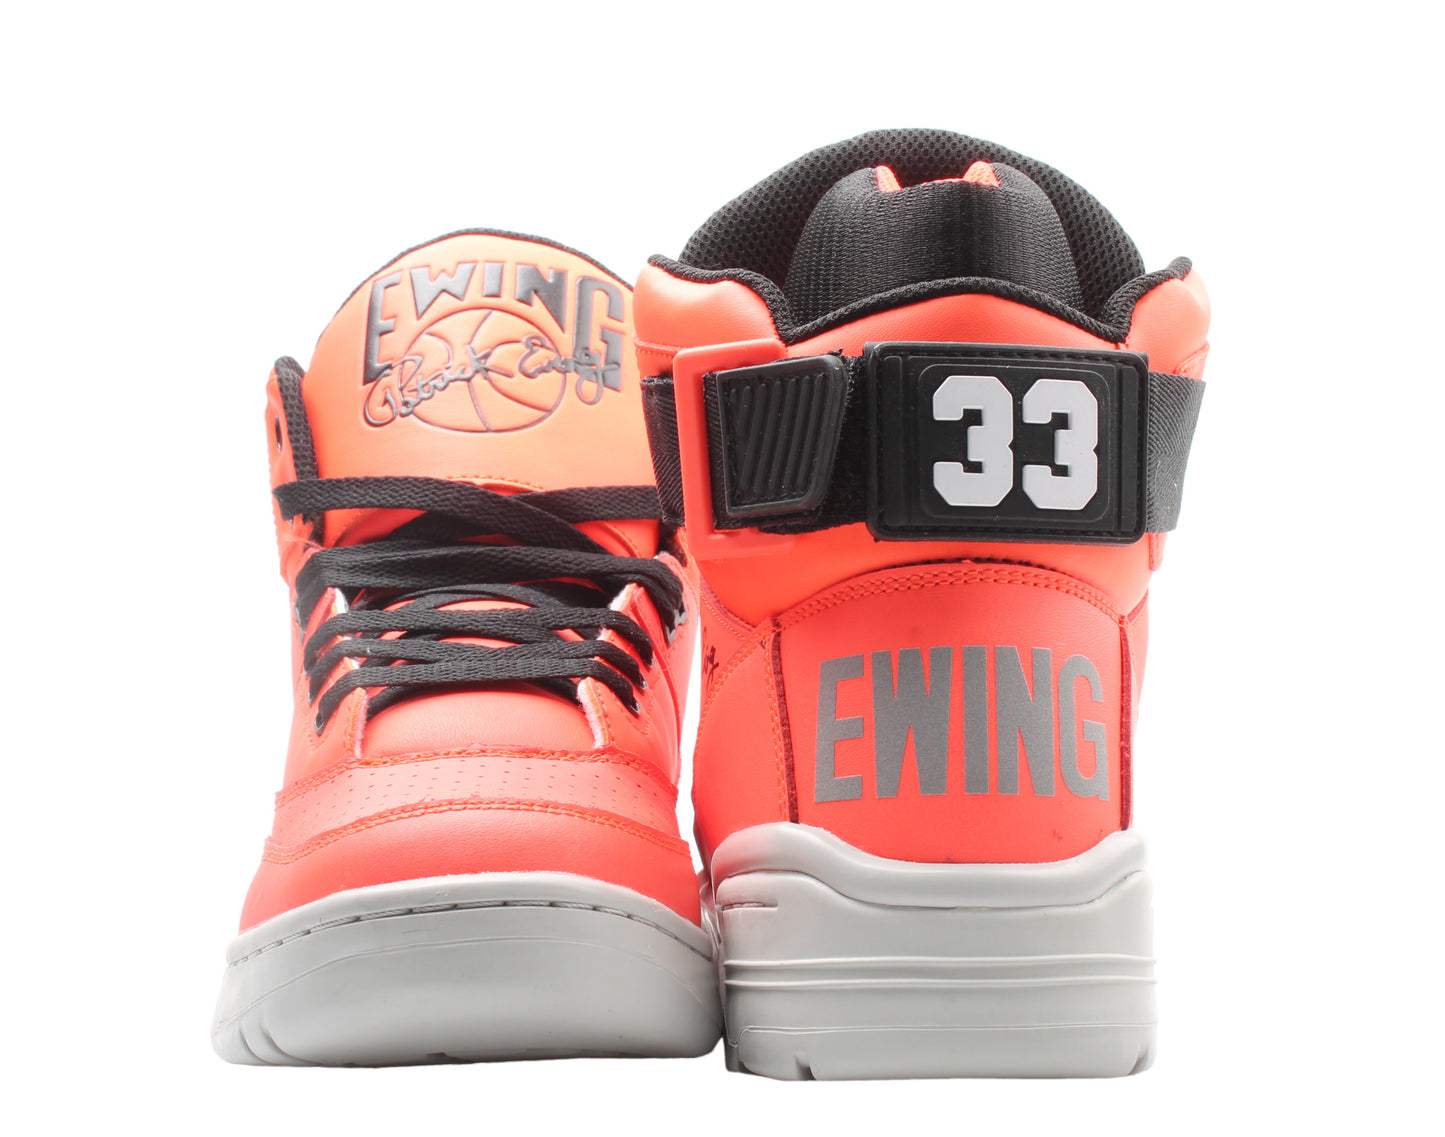 Ewing Athletics Ewing 33 Hi Alarm Red/Grey Men's Basketball Shoes 1BM00757-603